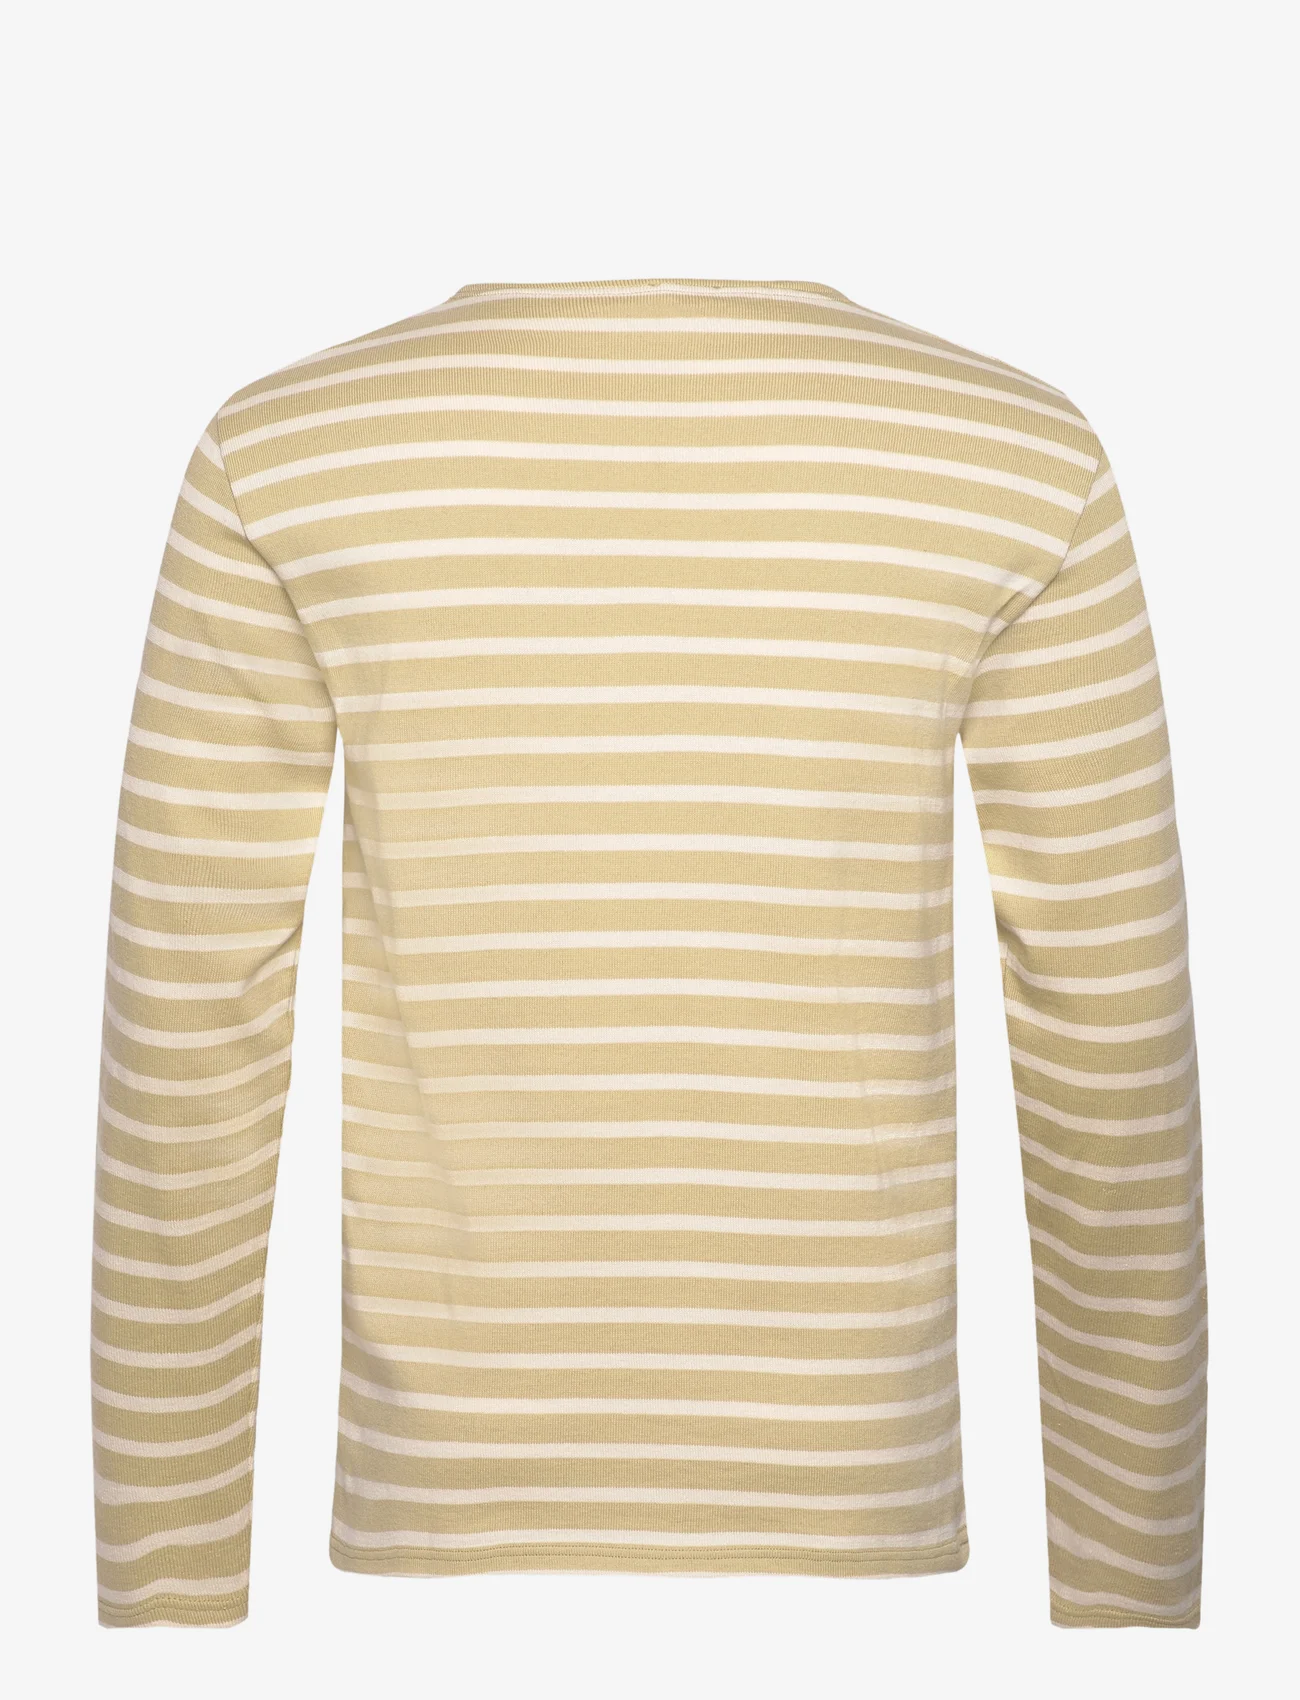 Armor Lux - Striped Breton Shirt Héritage - pitkähihaiset - pale olive/nature - 1